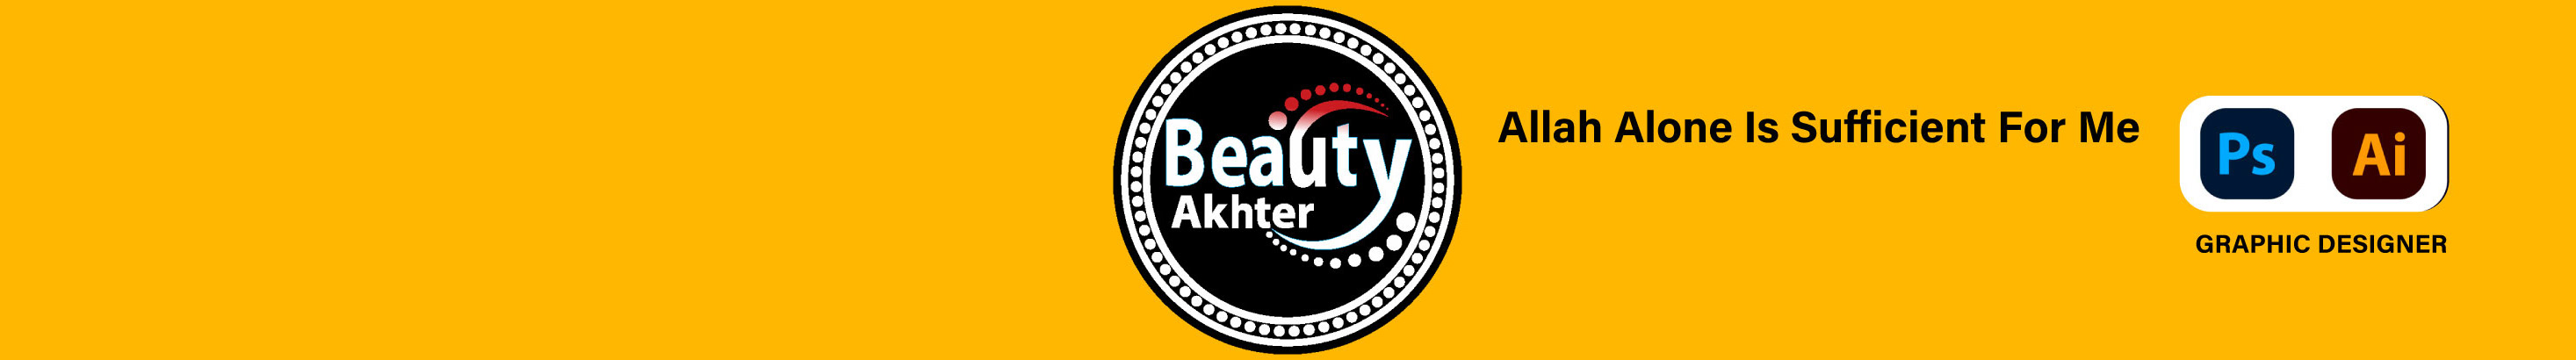 Баннер профиля Mst: Beauty Akhter